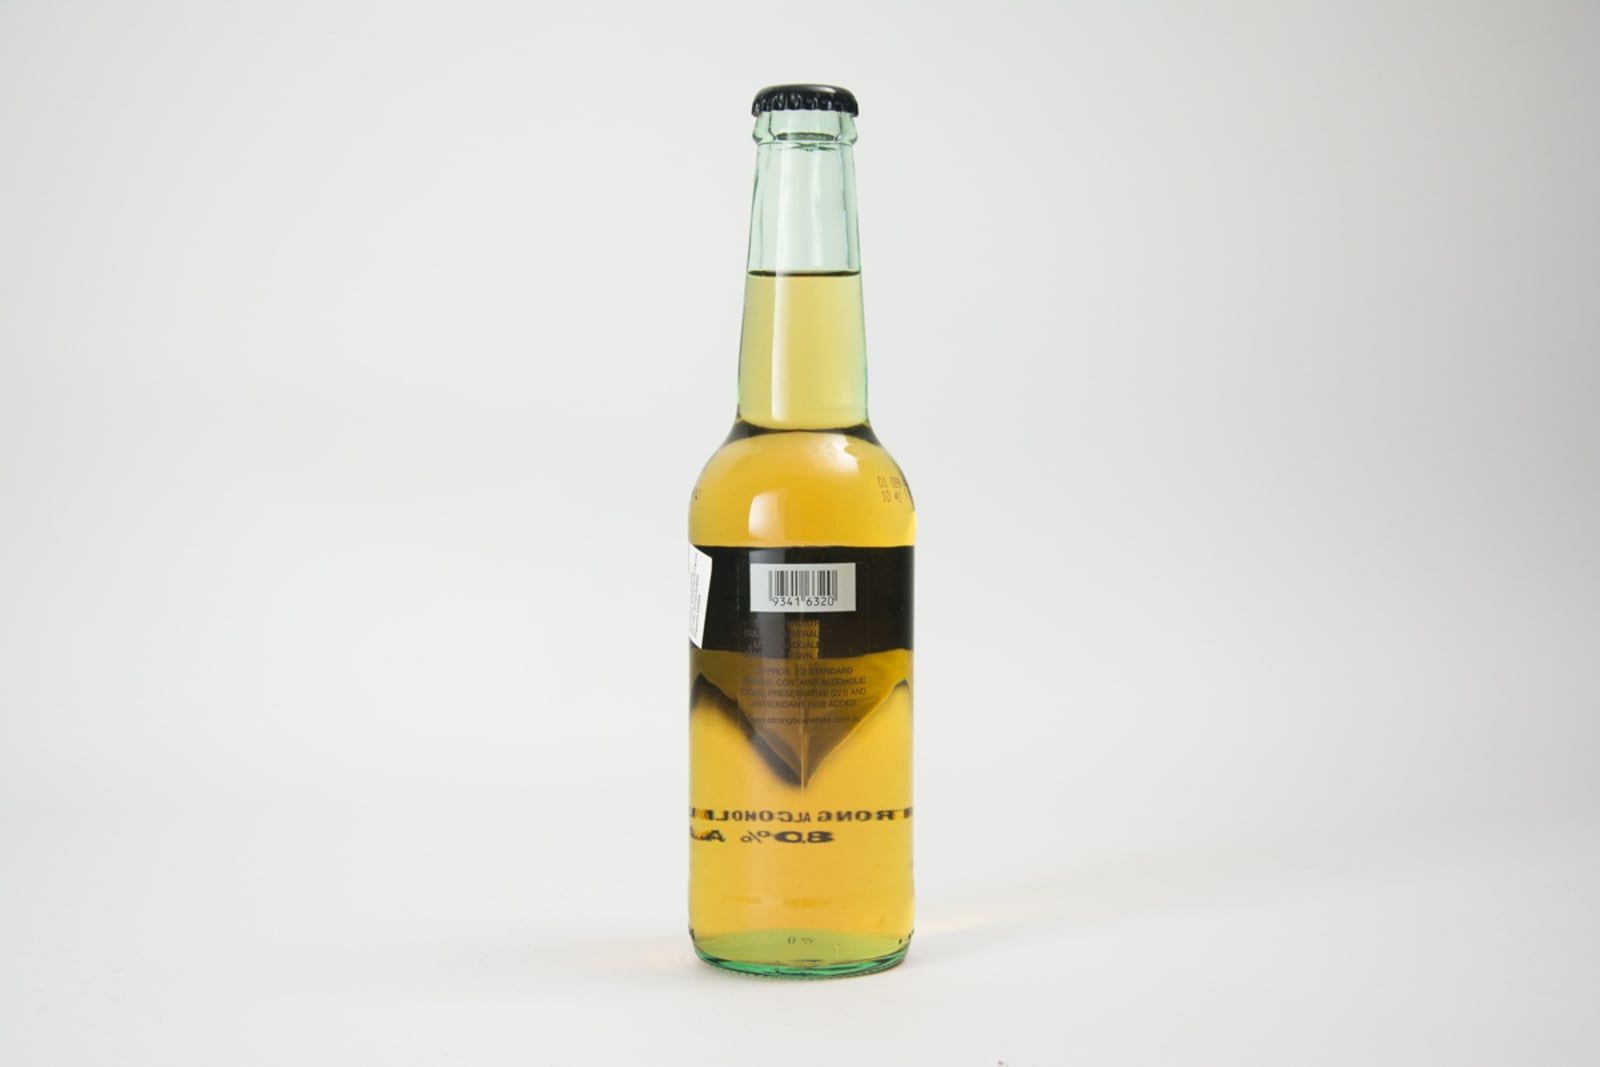 Strongbow White Beer Bottle, 345 ml